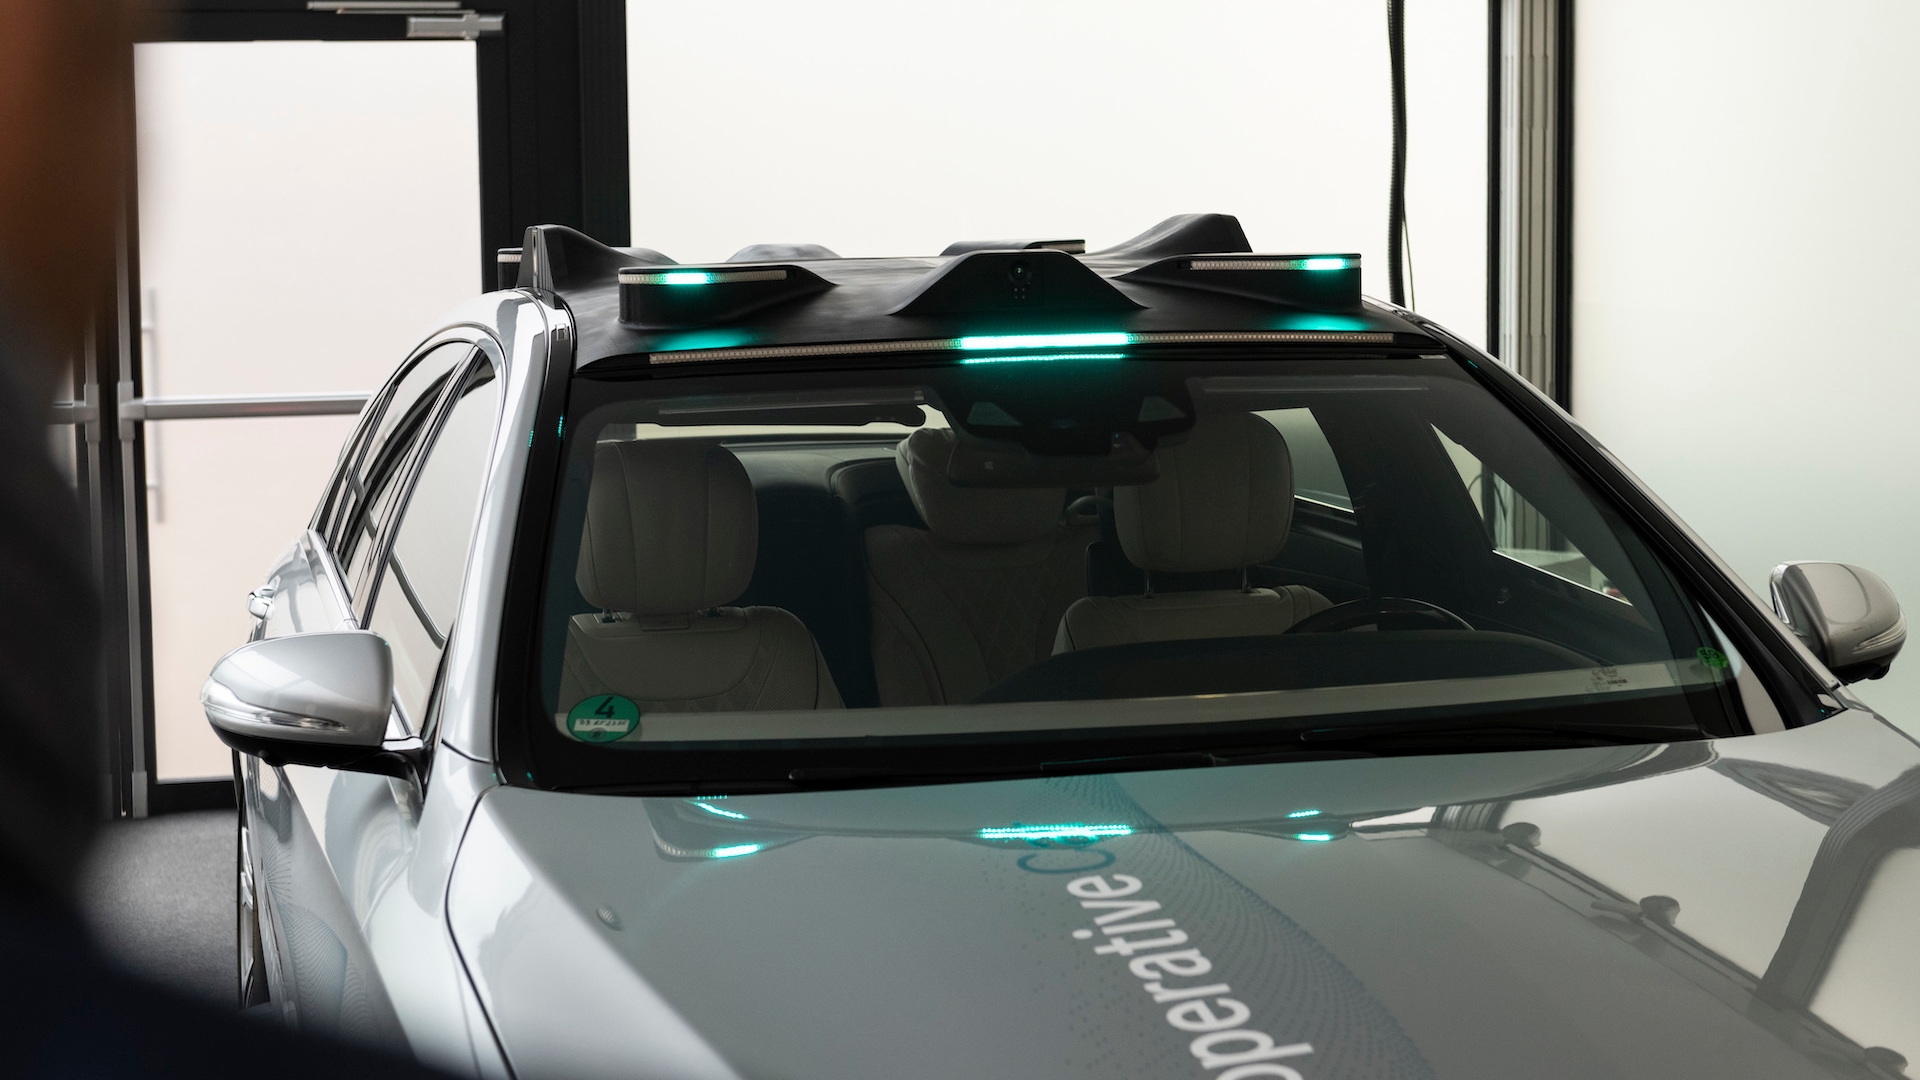 Mercedes-Benz self-driving Cooperation Car